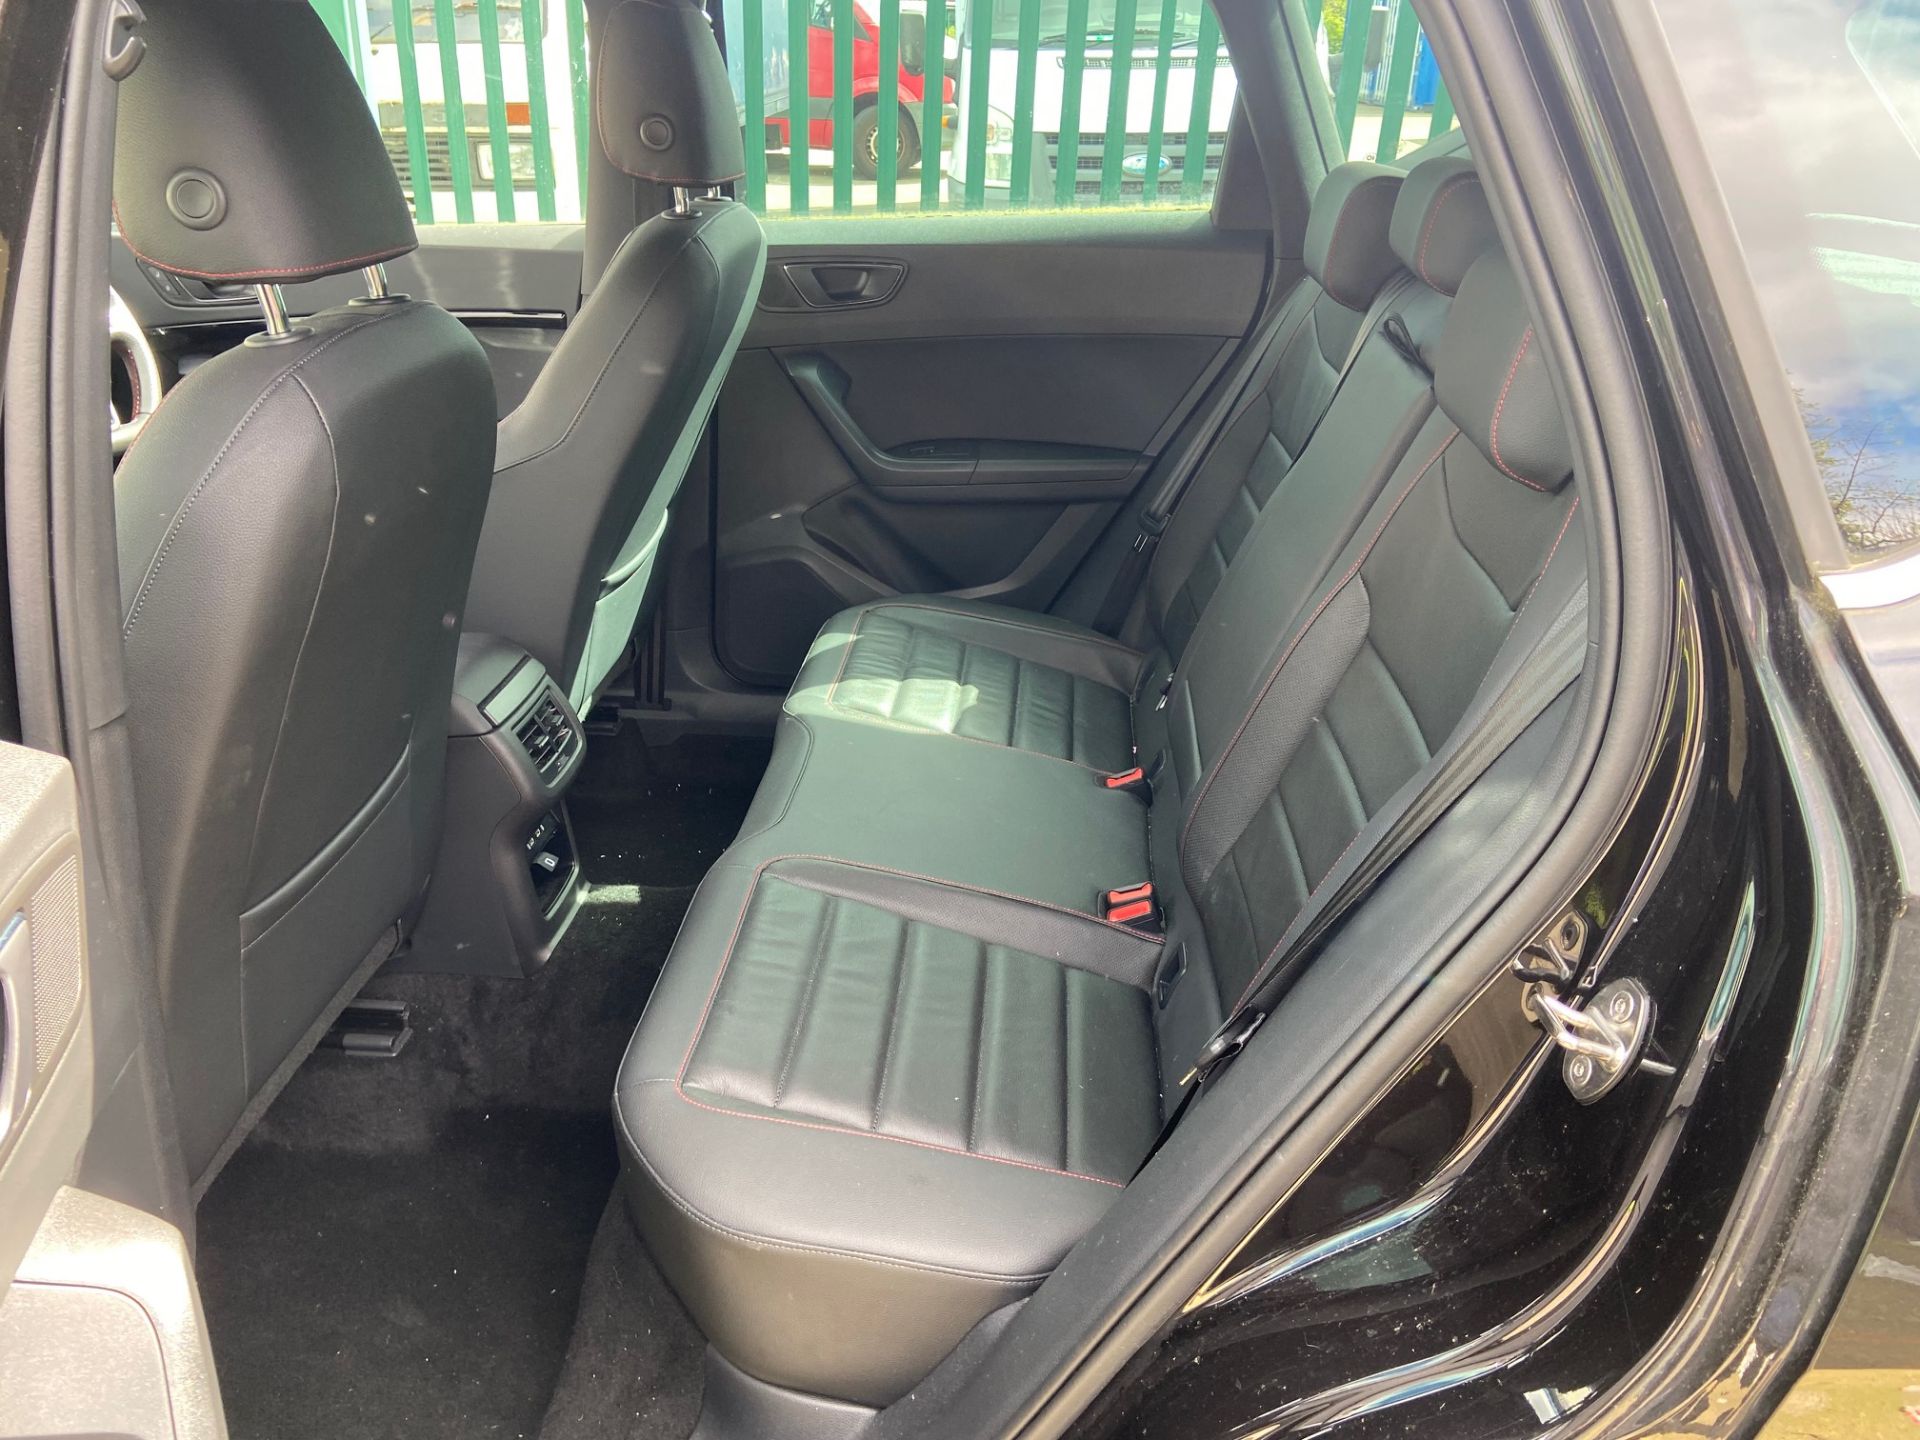 SEAT ATECA (YOM 2019) FR SPORT TSi 4 DRIVE 2.0 five door hatchback - petrol - black. - Image 11 of 13